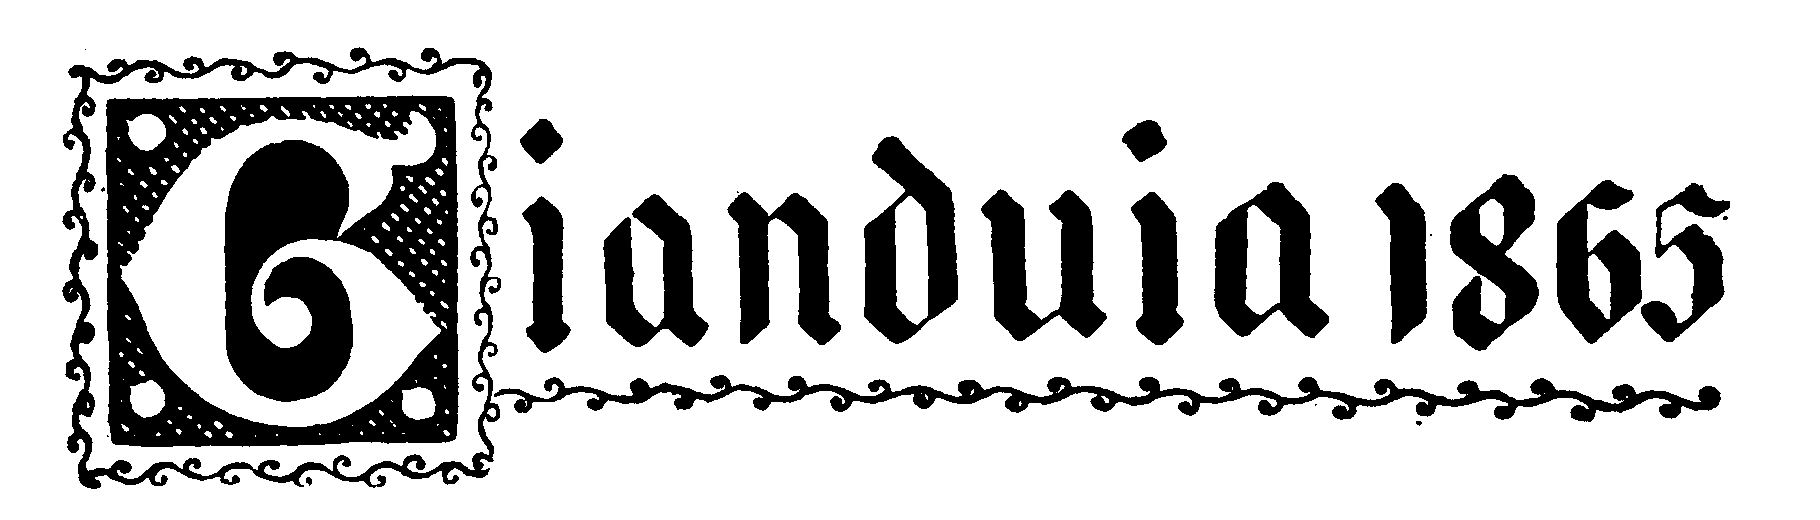 GIANDUIA 1865